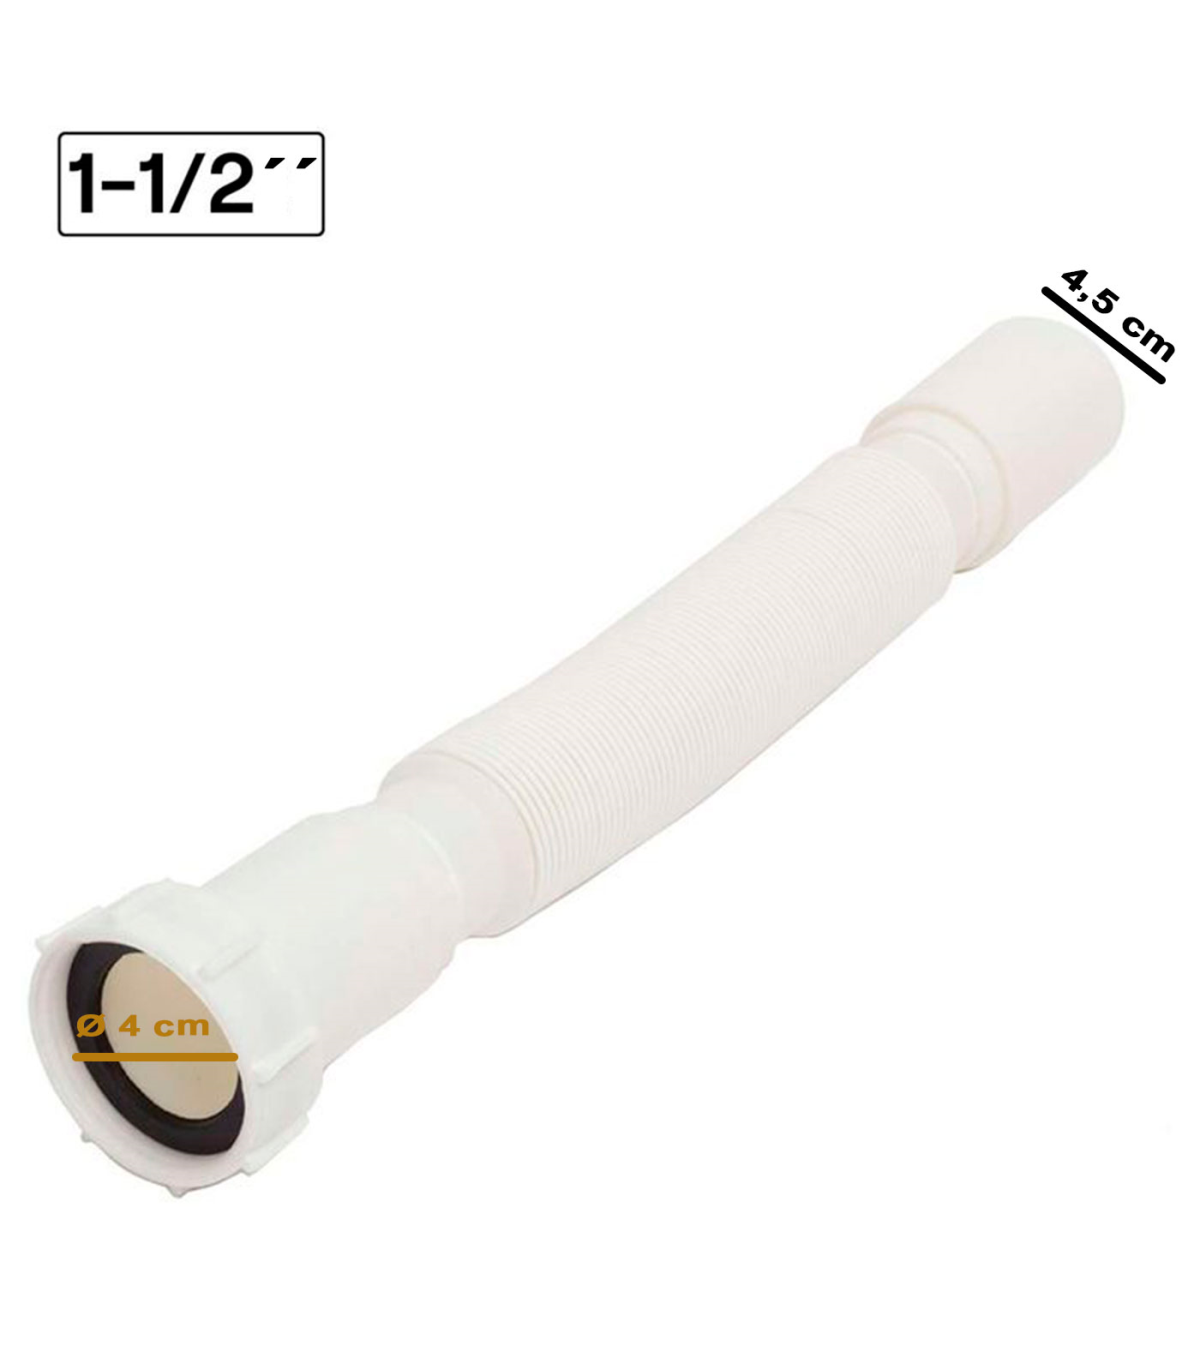 Tradineur - Tubo de desagüe flexible para fregadero, manguera de drenaje,  sifón de plástico para lavabo, trampa de olor, extensi